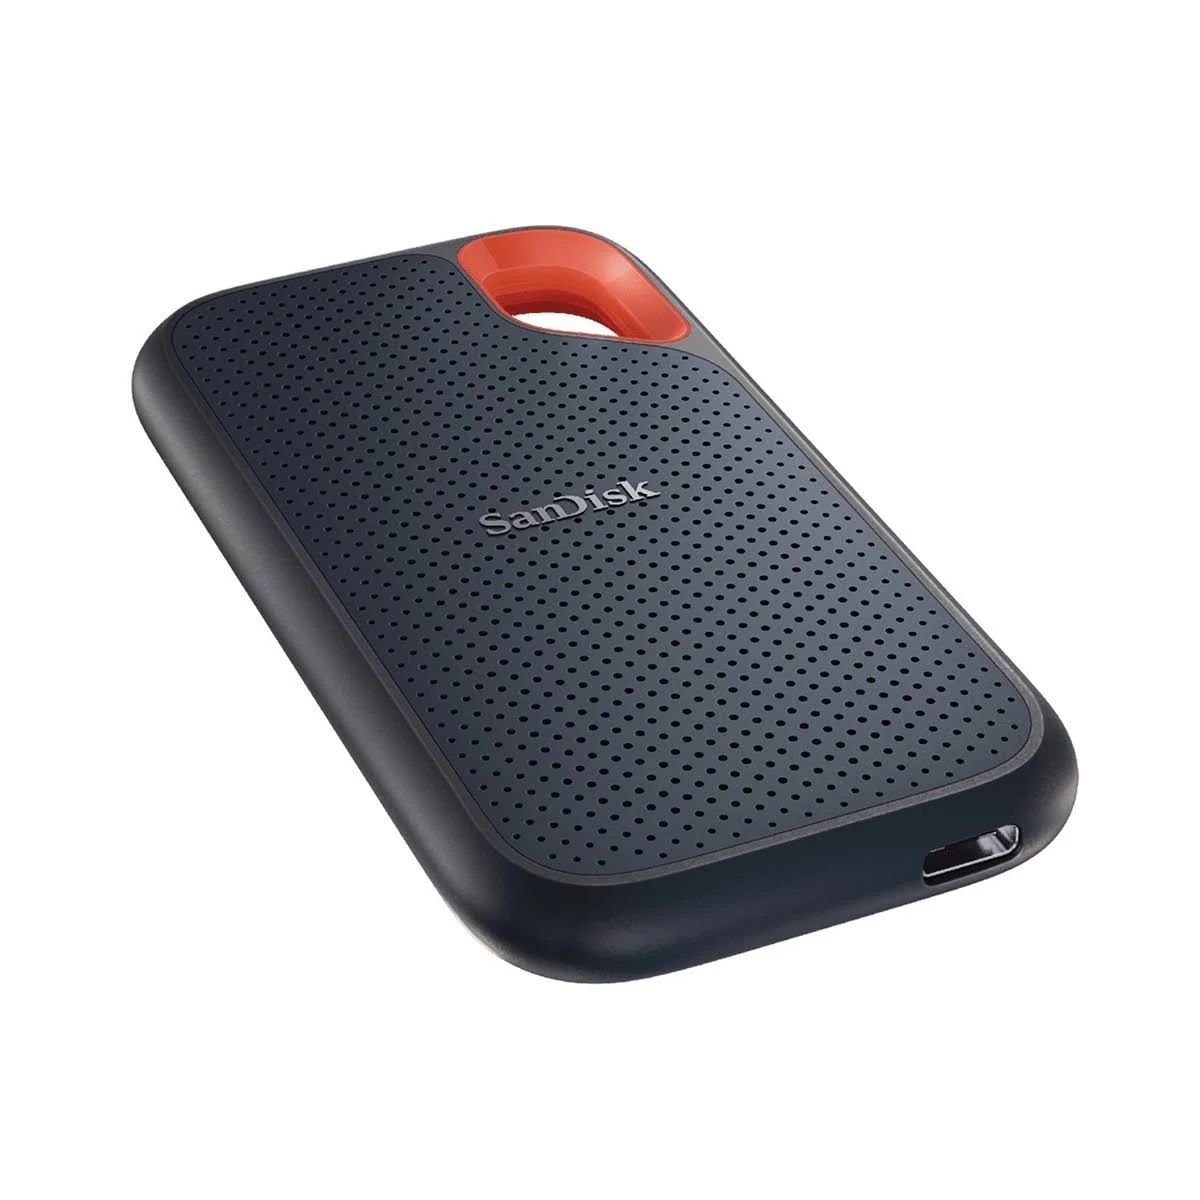 SANDISK Extreme Portable, 1 TB extern, Flash, mehrfarbig SSD